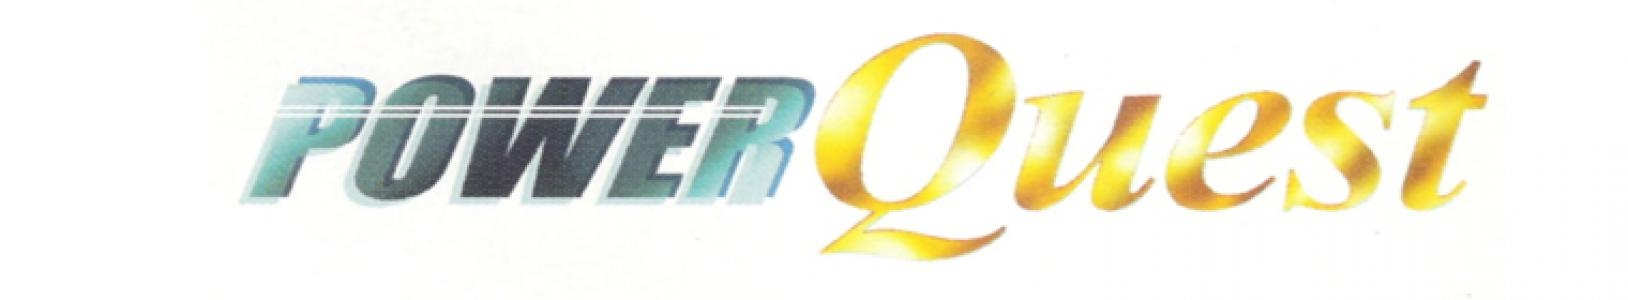 Power Quest banner